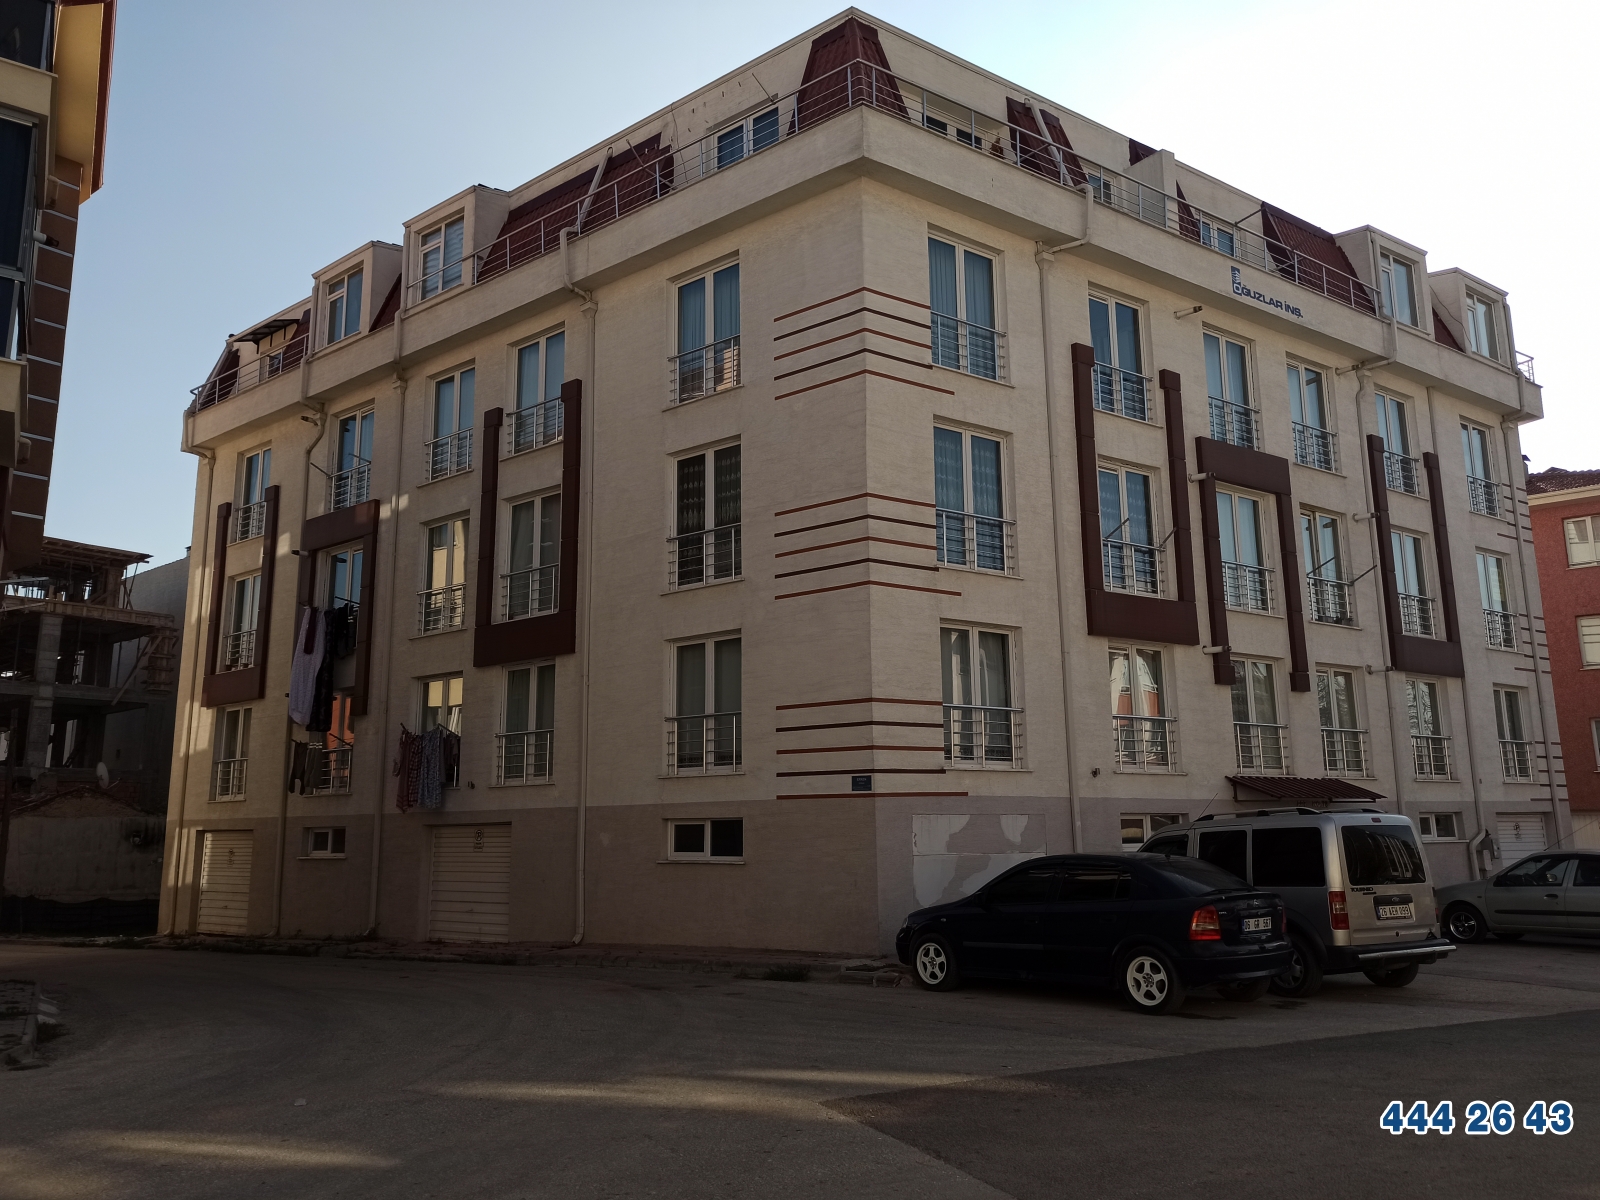 Burgan Bank'tan Eskişehir Tepebaşı'nda 155 m² 3+1 Dubleks Daire